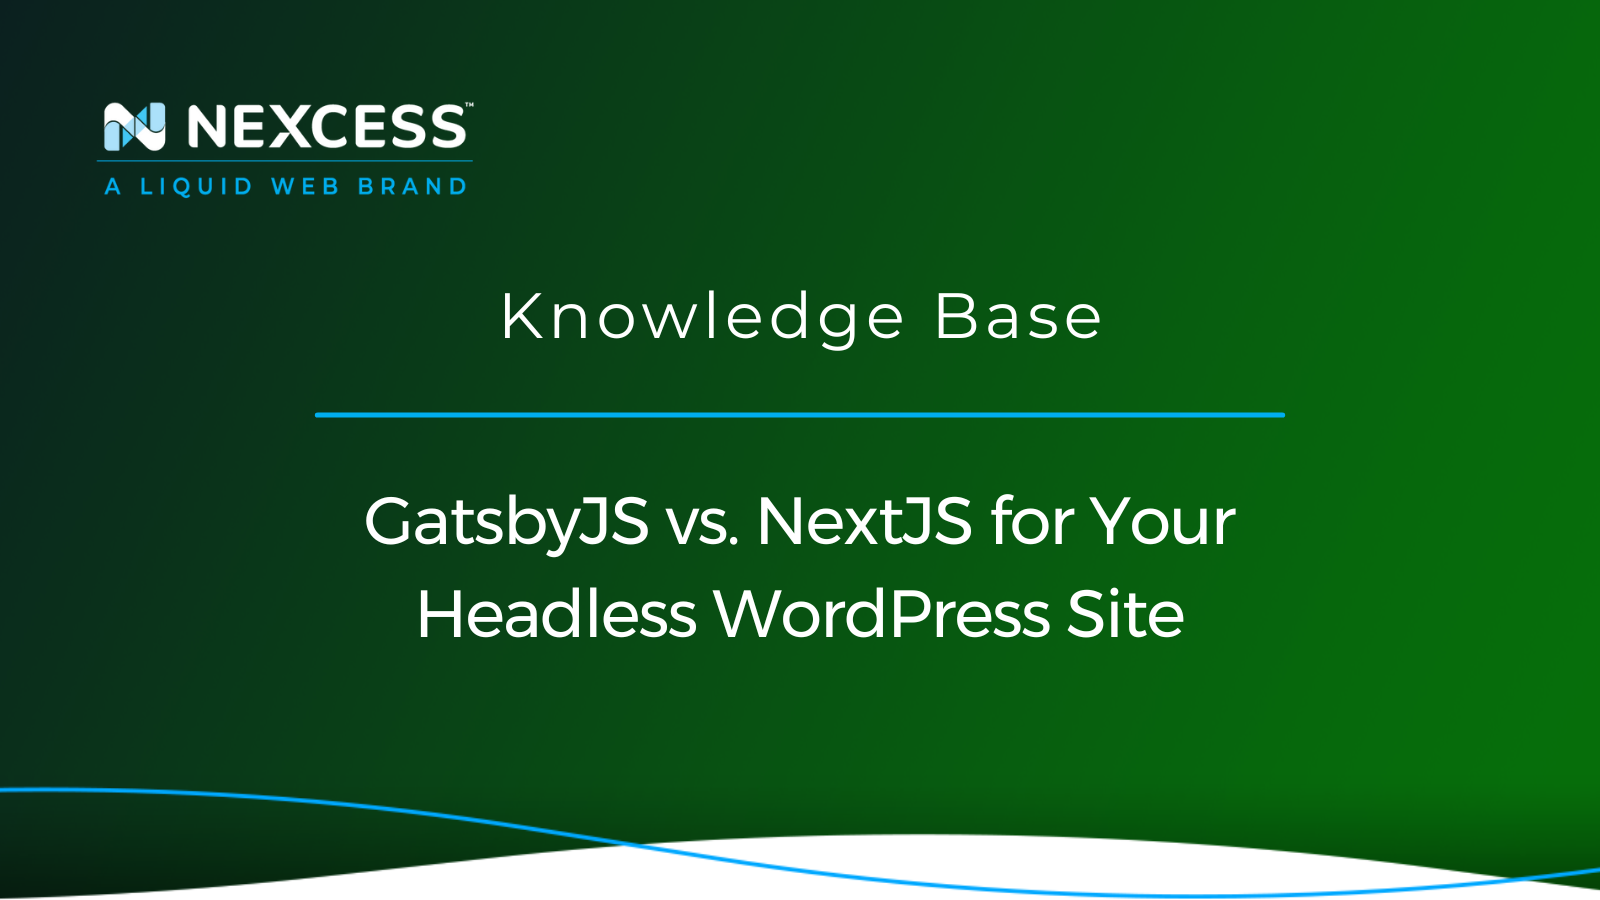 GatsbyJS vs. NextJS How to Use NextJS for WordPress [2023] Nexcess